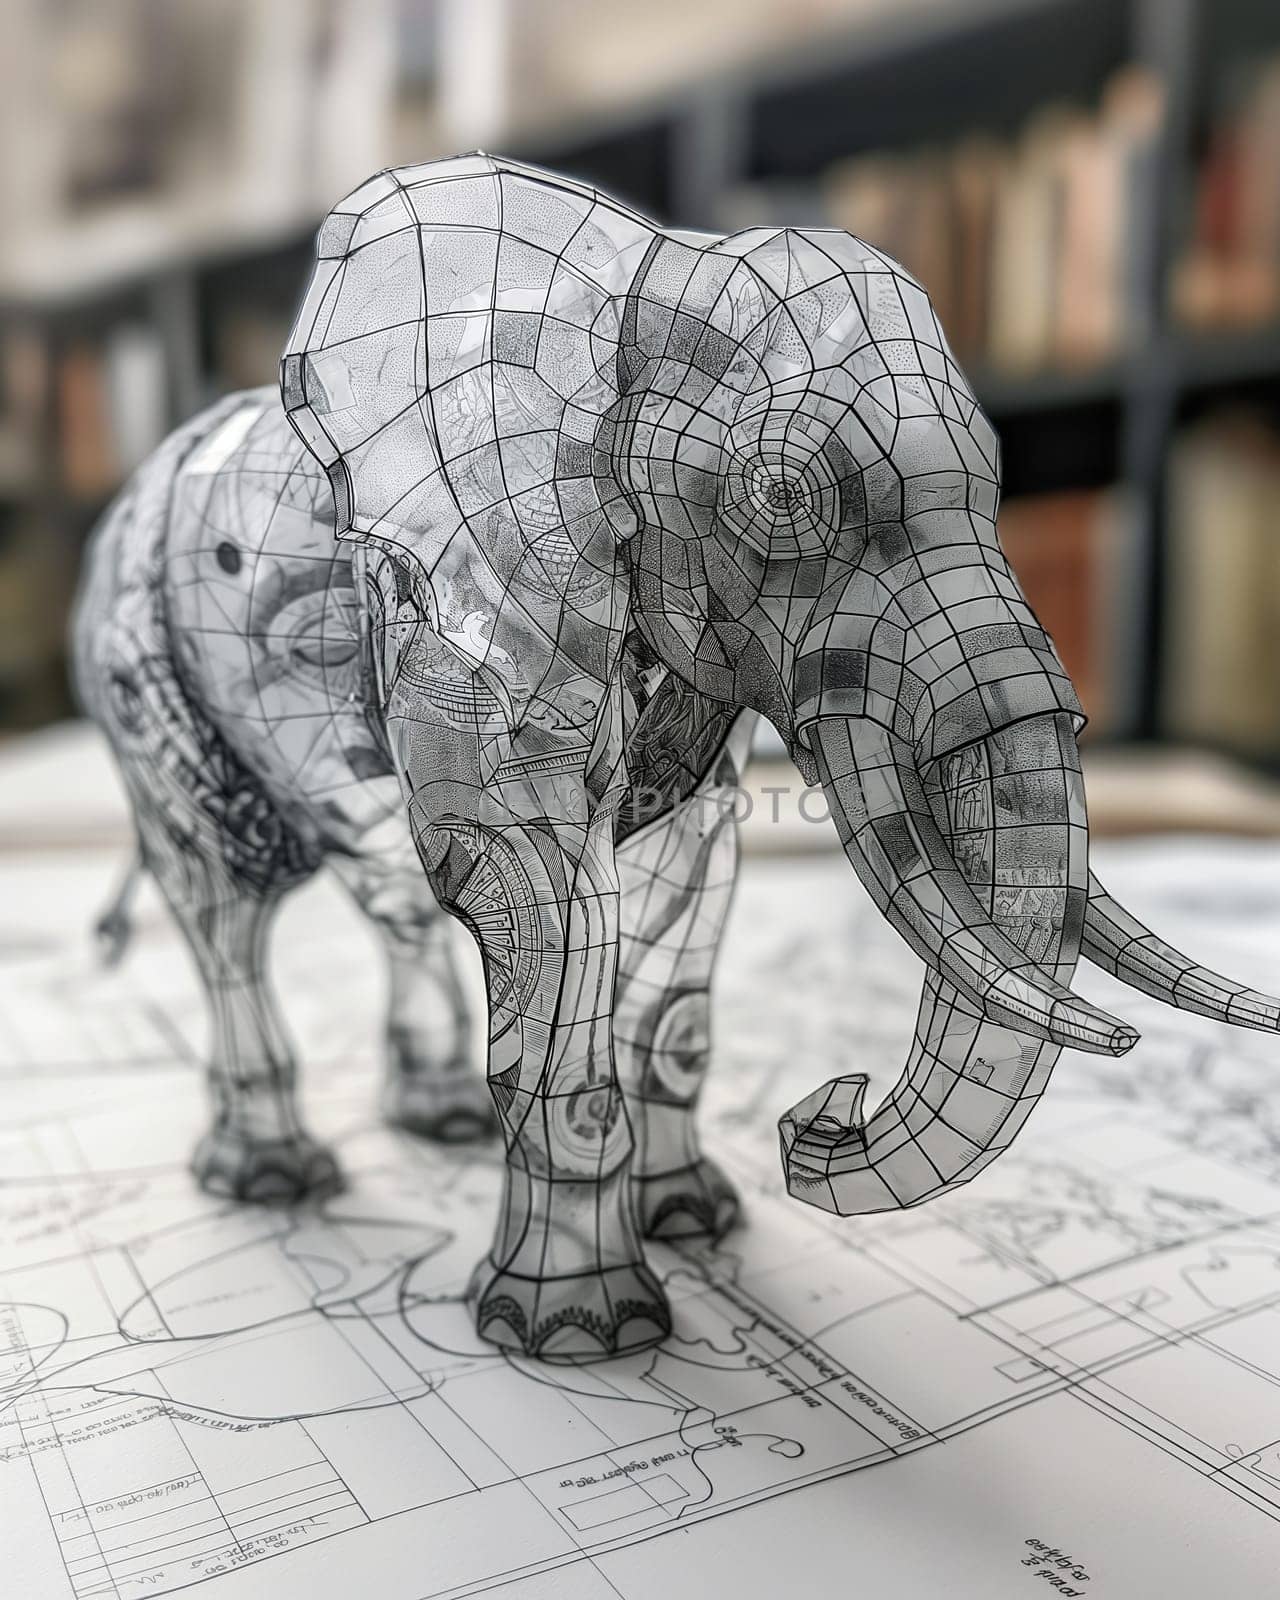 Wireframe Elephant Design in Modern Office. by Fischeron